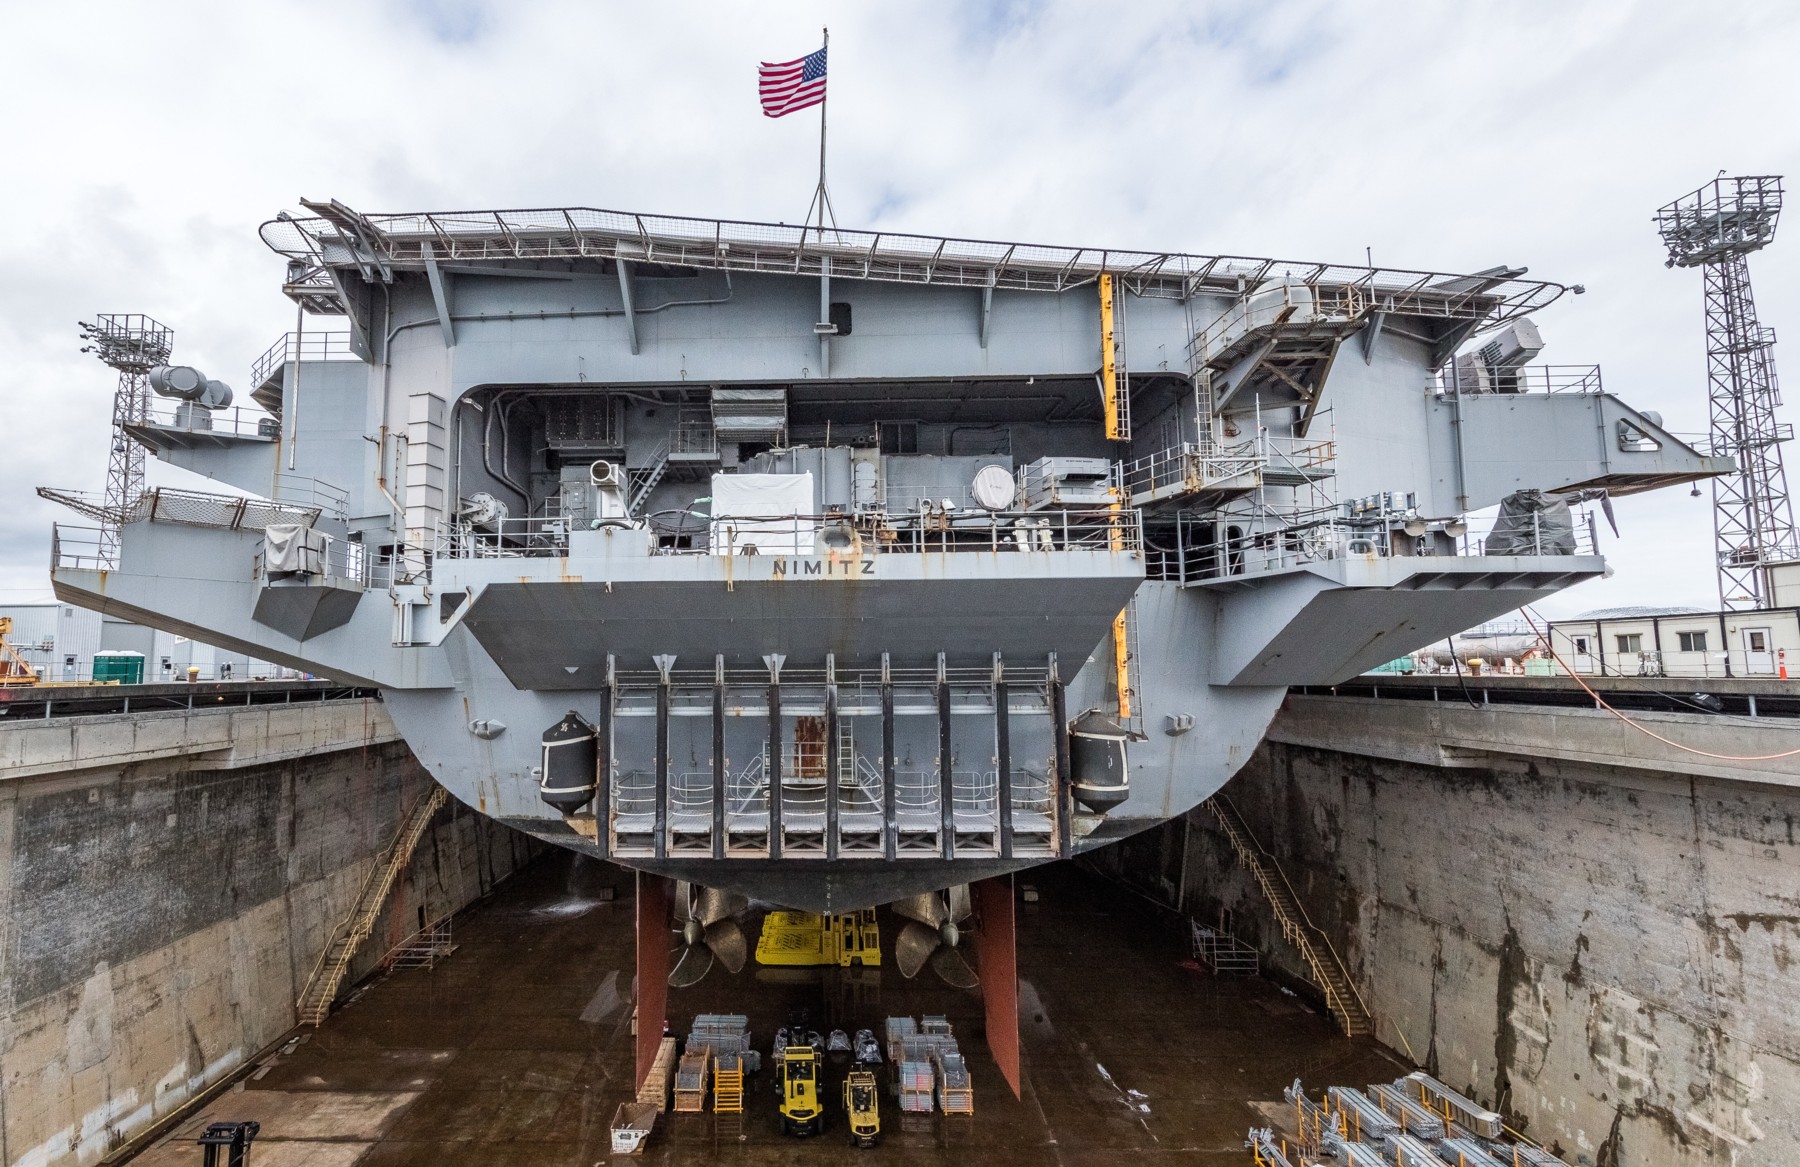 cvn-68 uss nimitz aircraft carrier us navy puget sound naval shipyard intermediate maintenance facility dry dock 235